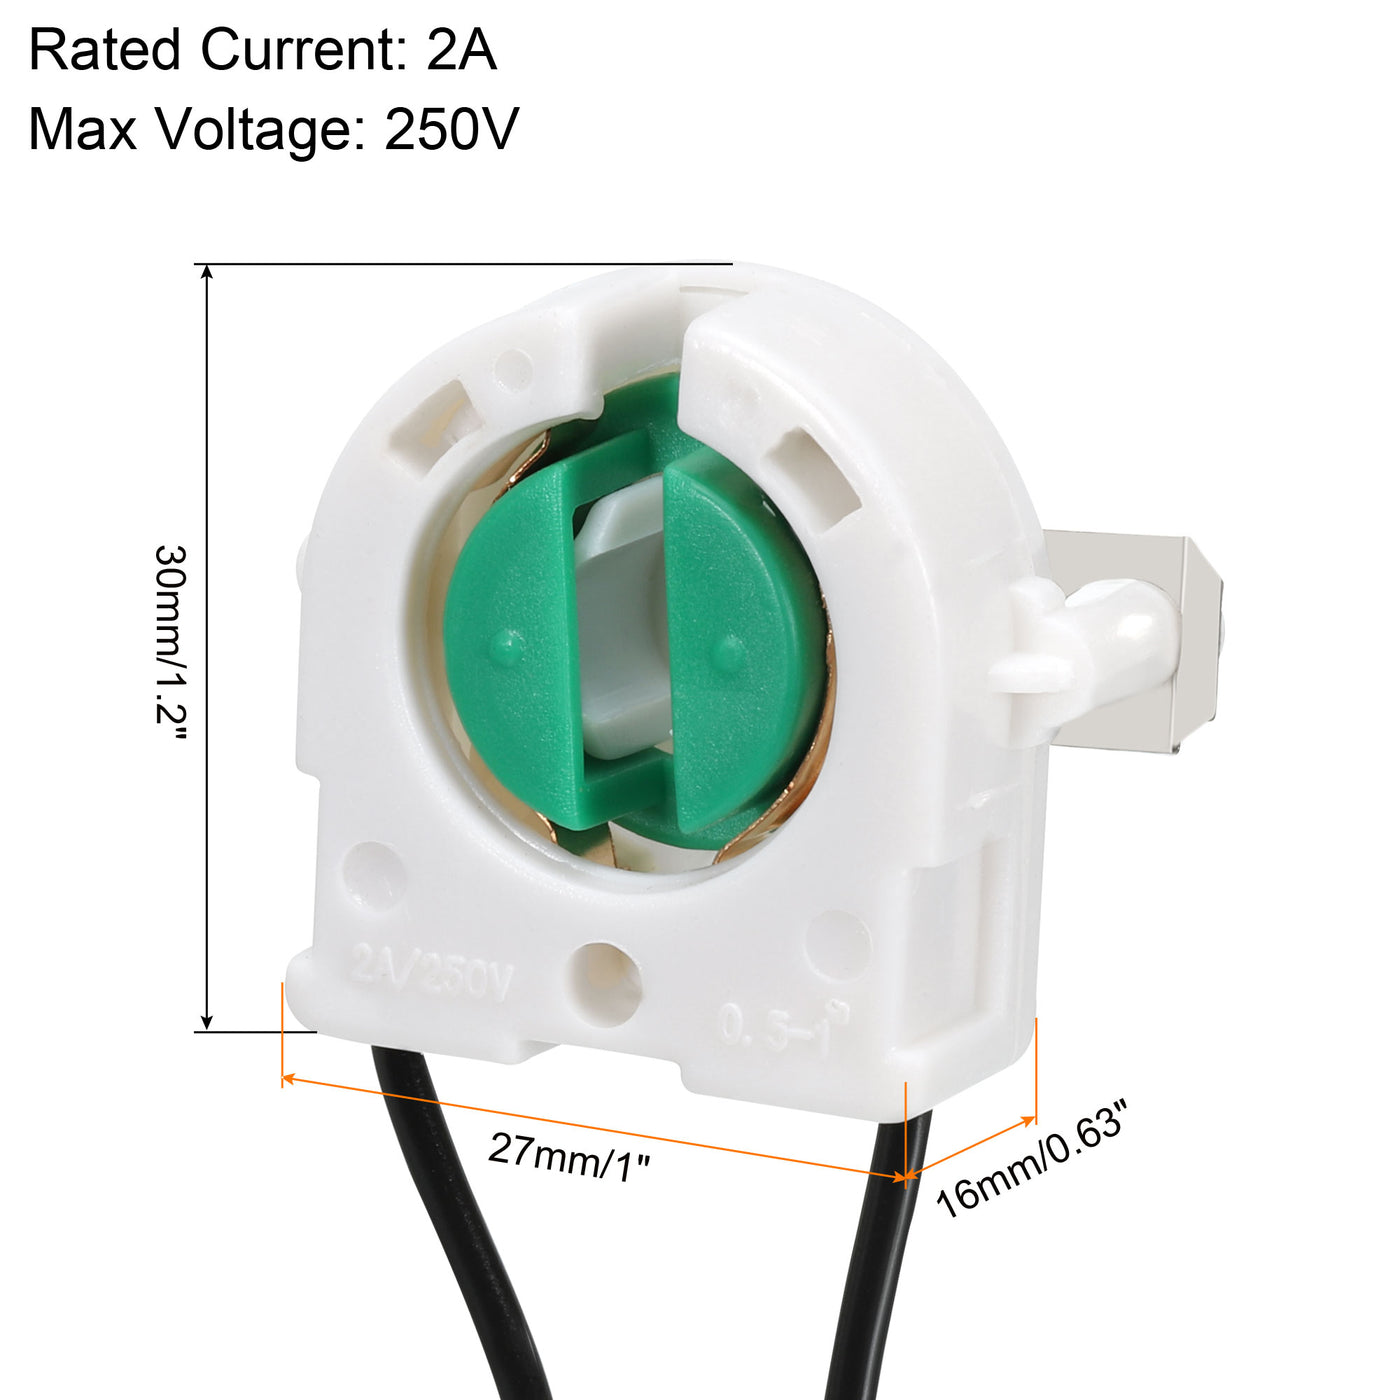 Harfington T8 Lamp Holder Socket Non-Shunted Light Holder with Wire 30x27x16mm for LED Fluorescent Tube, Pack of 8